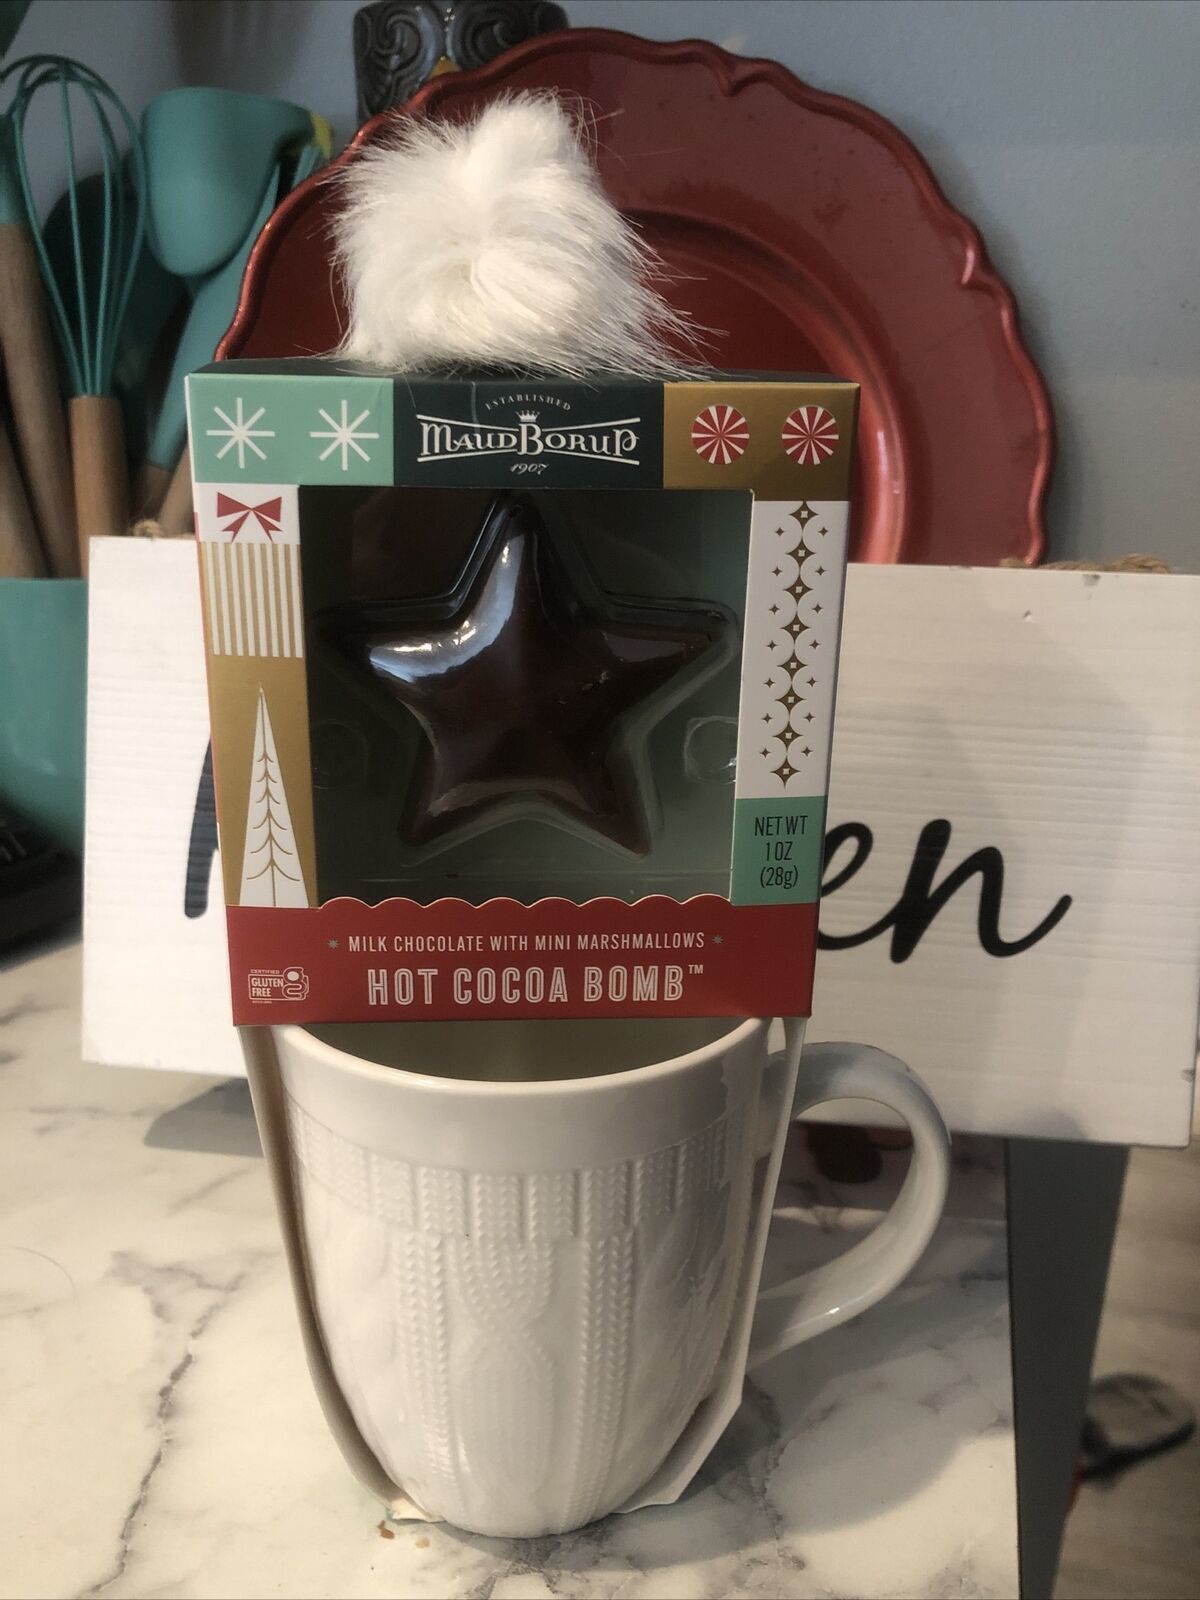 Hot Chocolate Bomb Mug Set - Elf on The Shelf